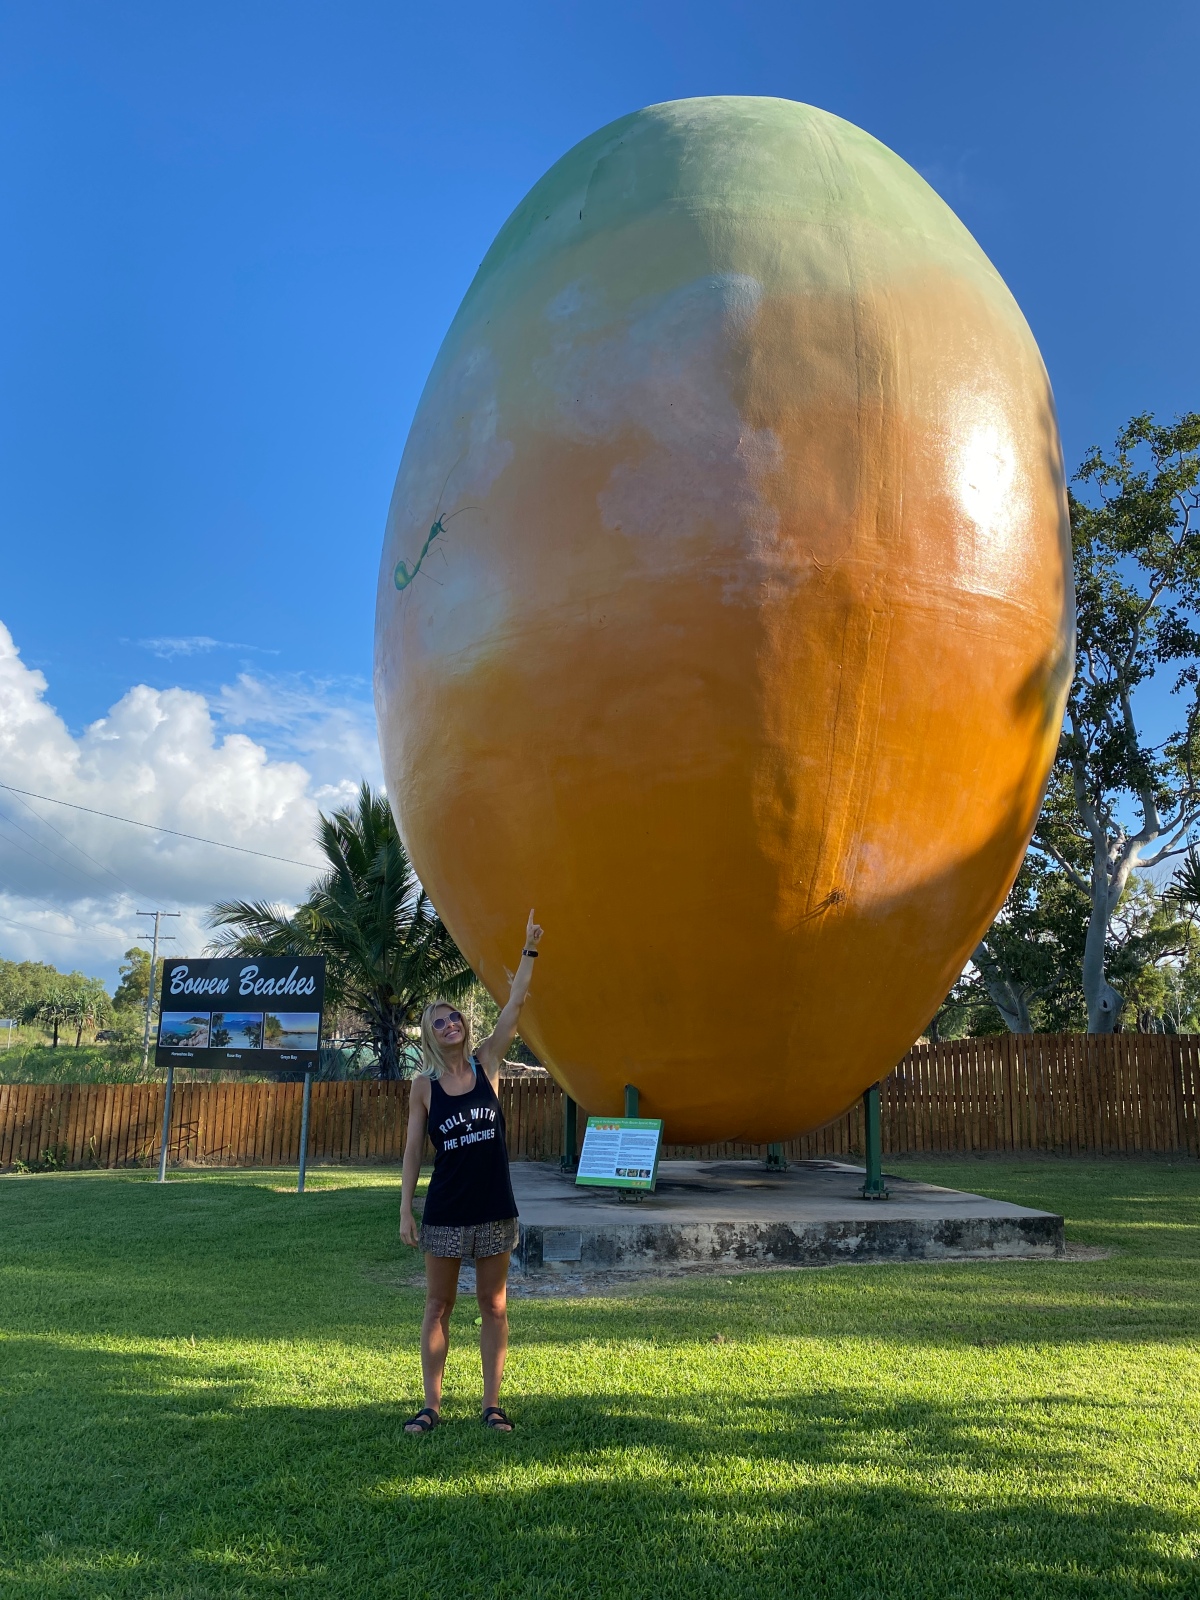 The Big Mango